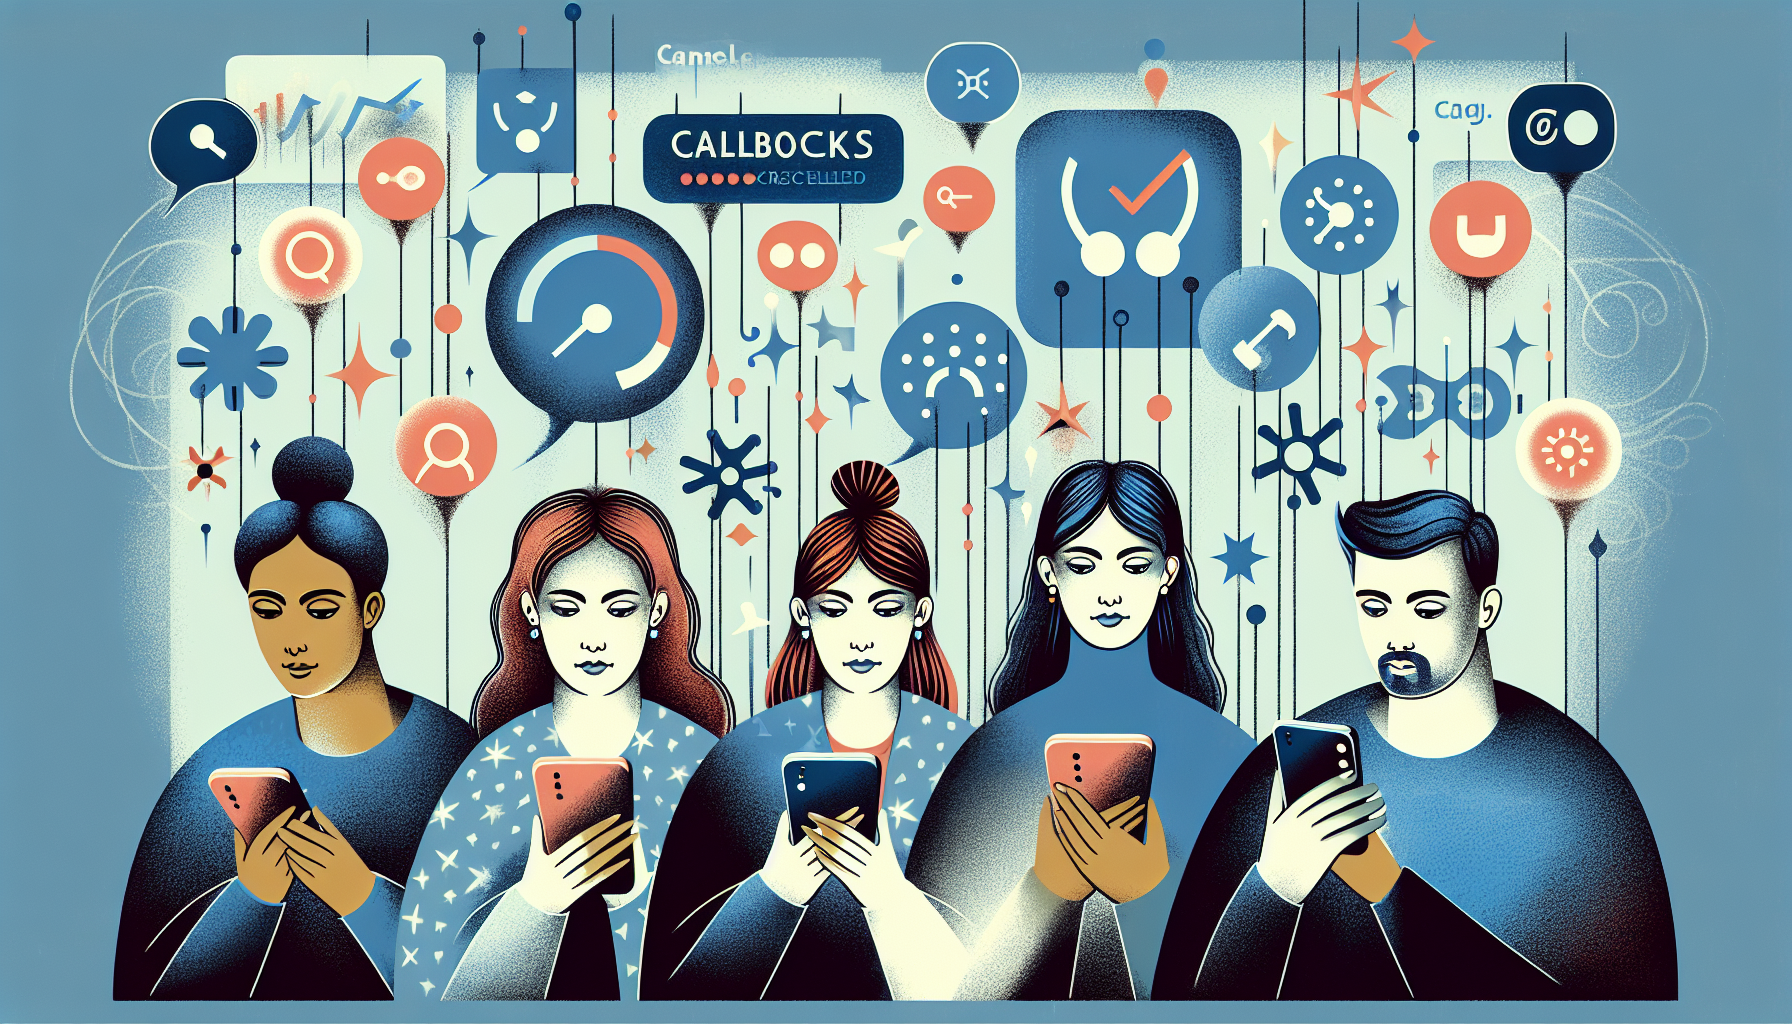 Illustration of customers managing callbacks via text